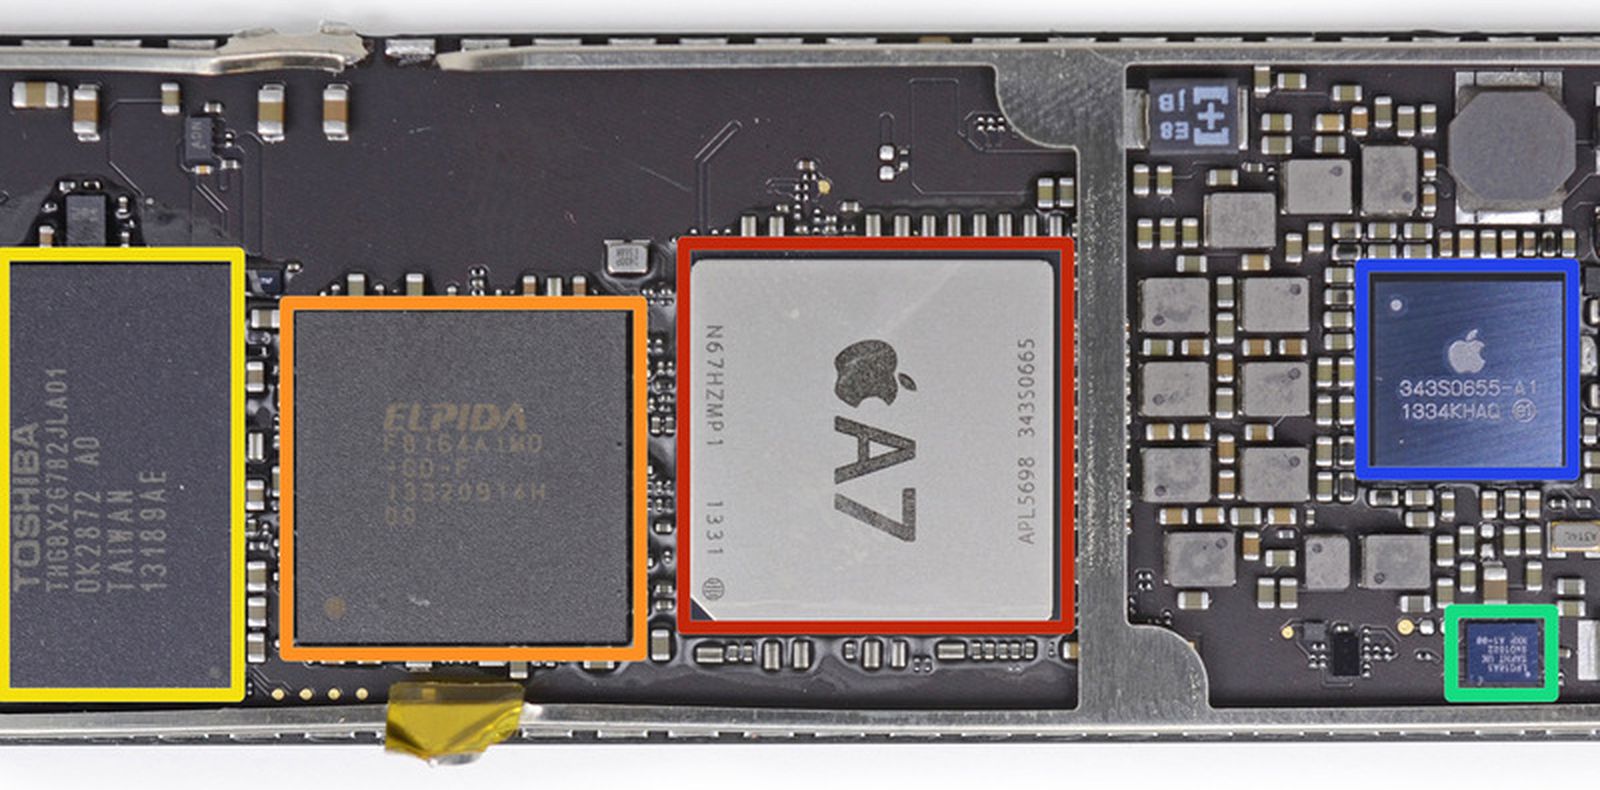 Teardown of iPad Air Reveals A7 Chip, LG Display, Qualcomm LTE Modem -  MacRumors